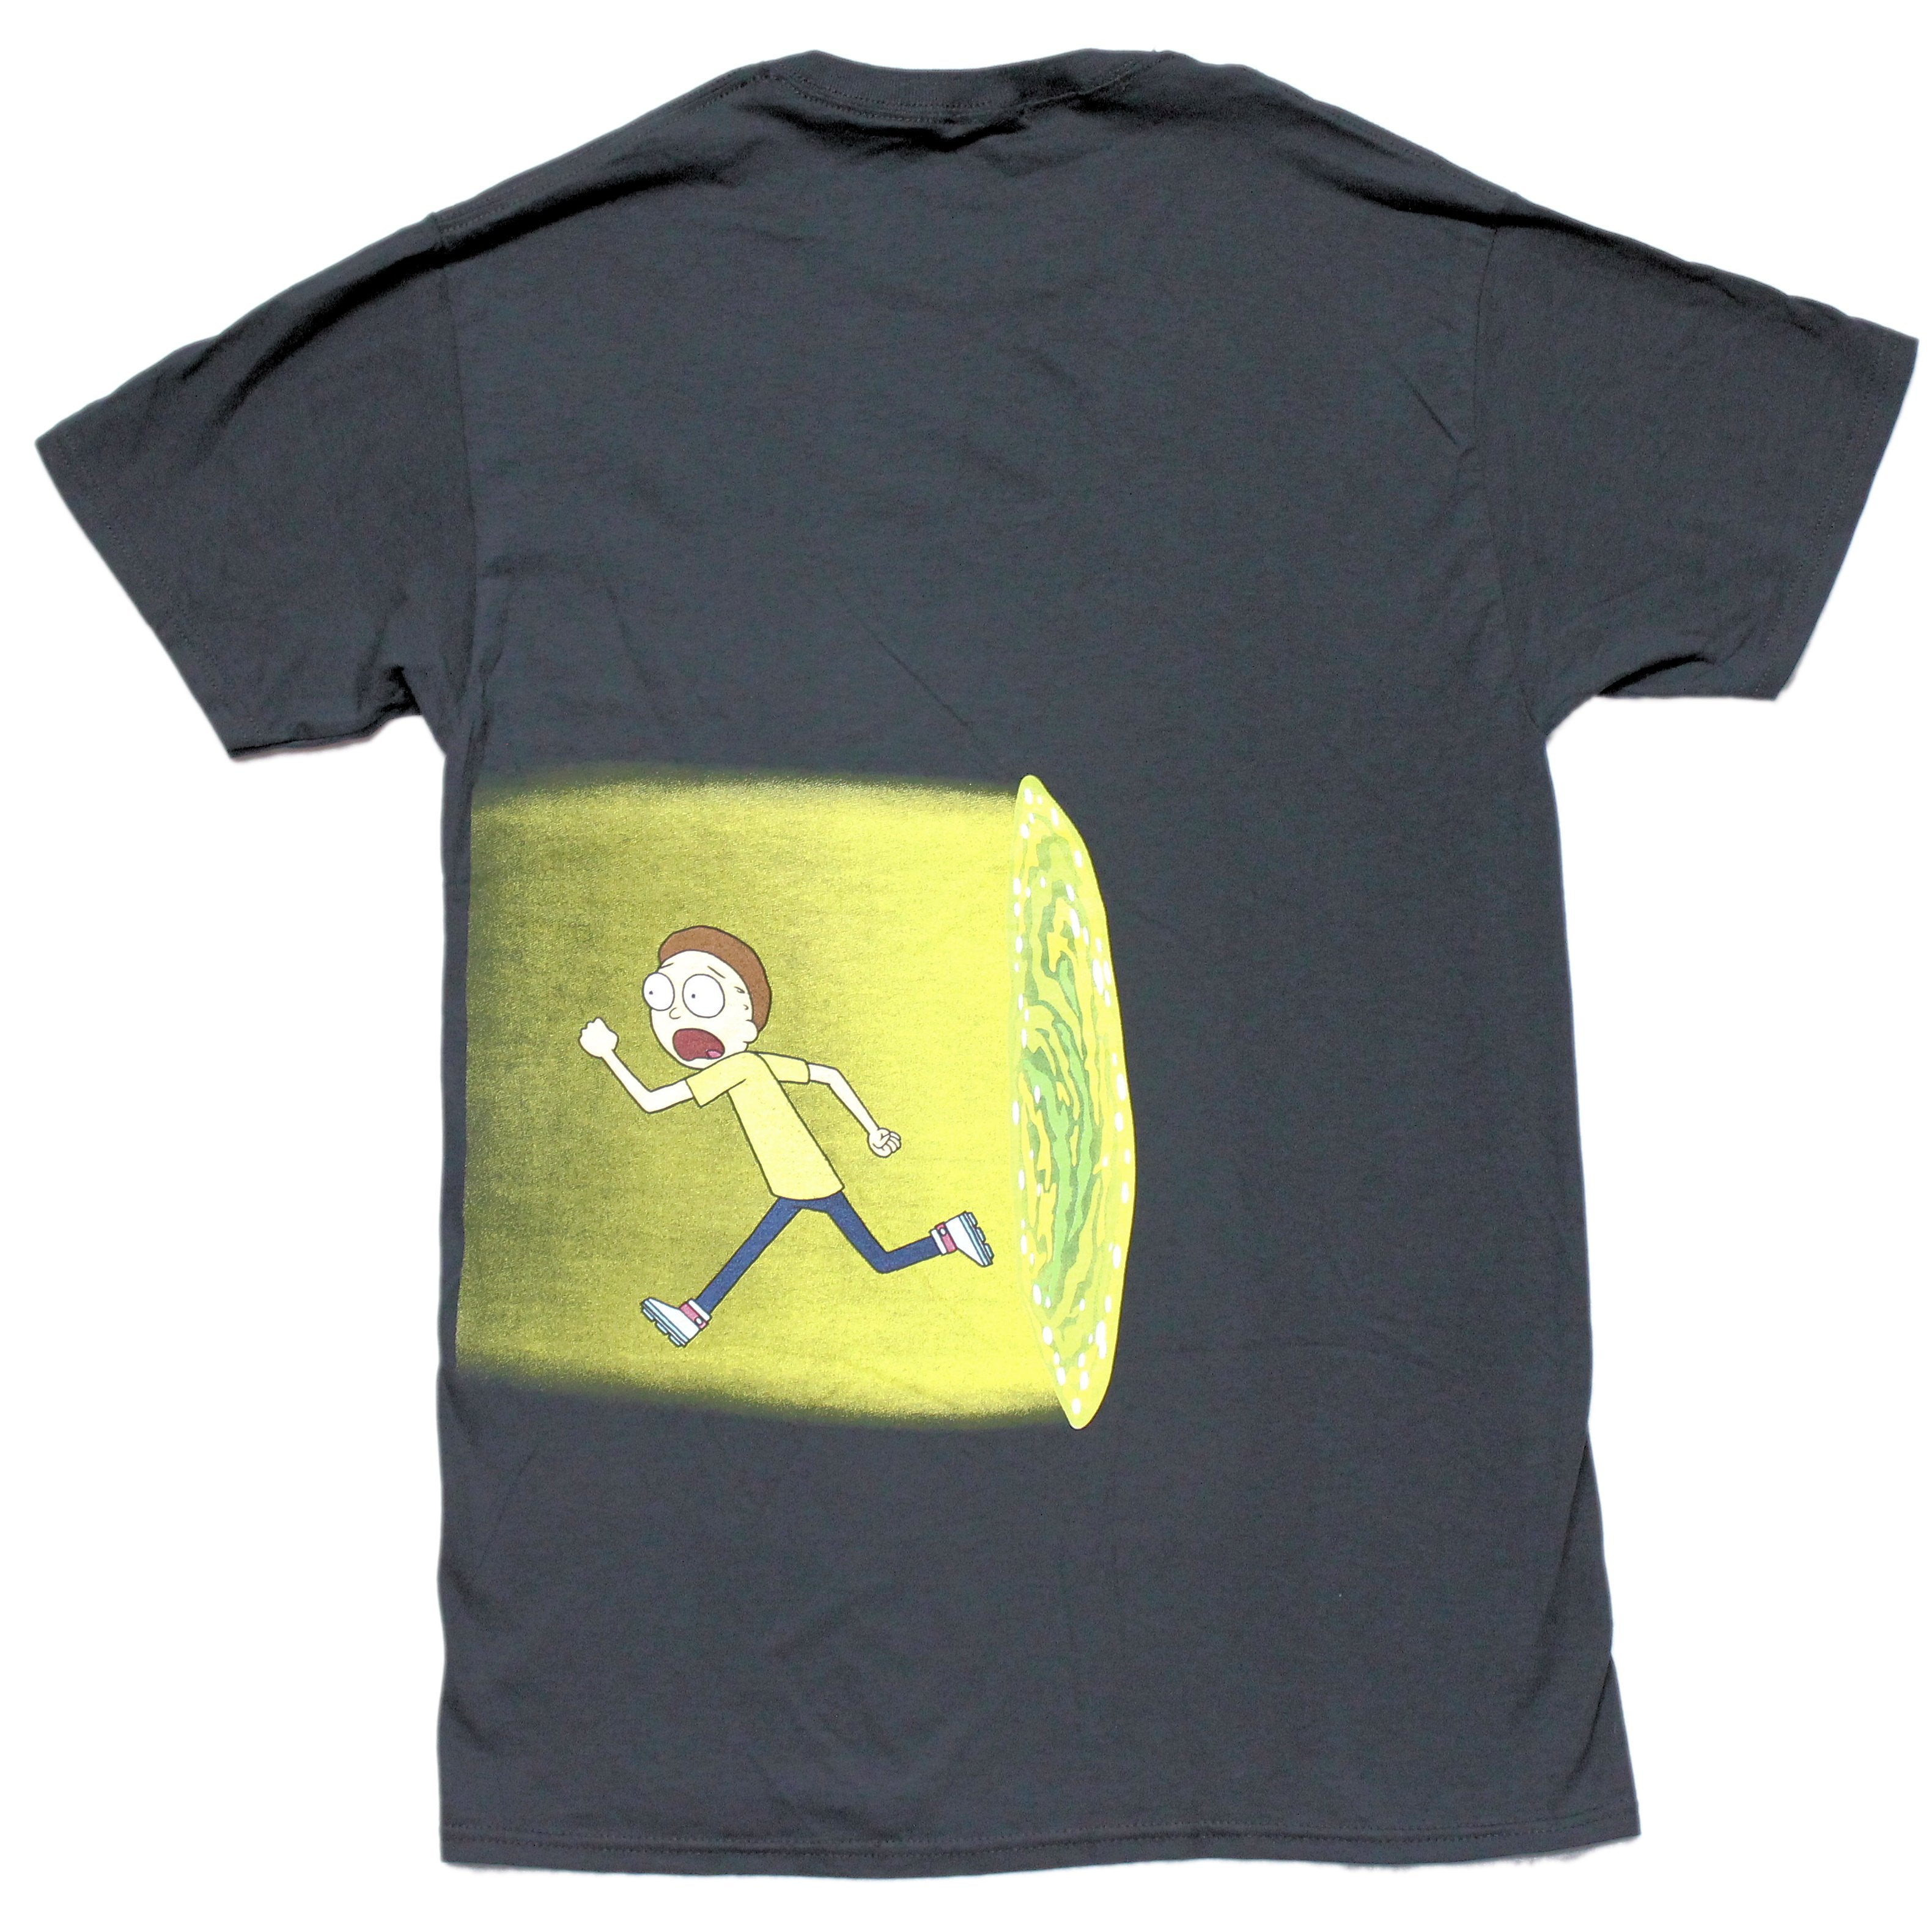 Rick and Morty Mens T-shirt - Running Through Portal & Shirt